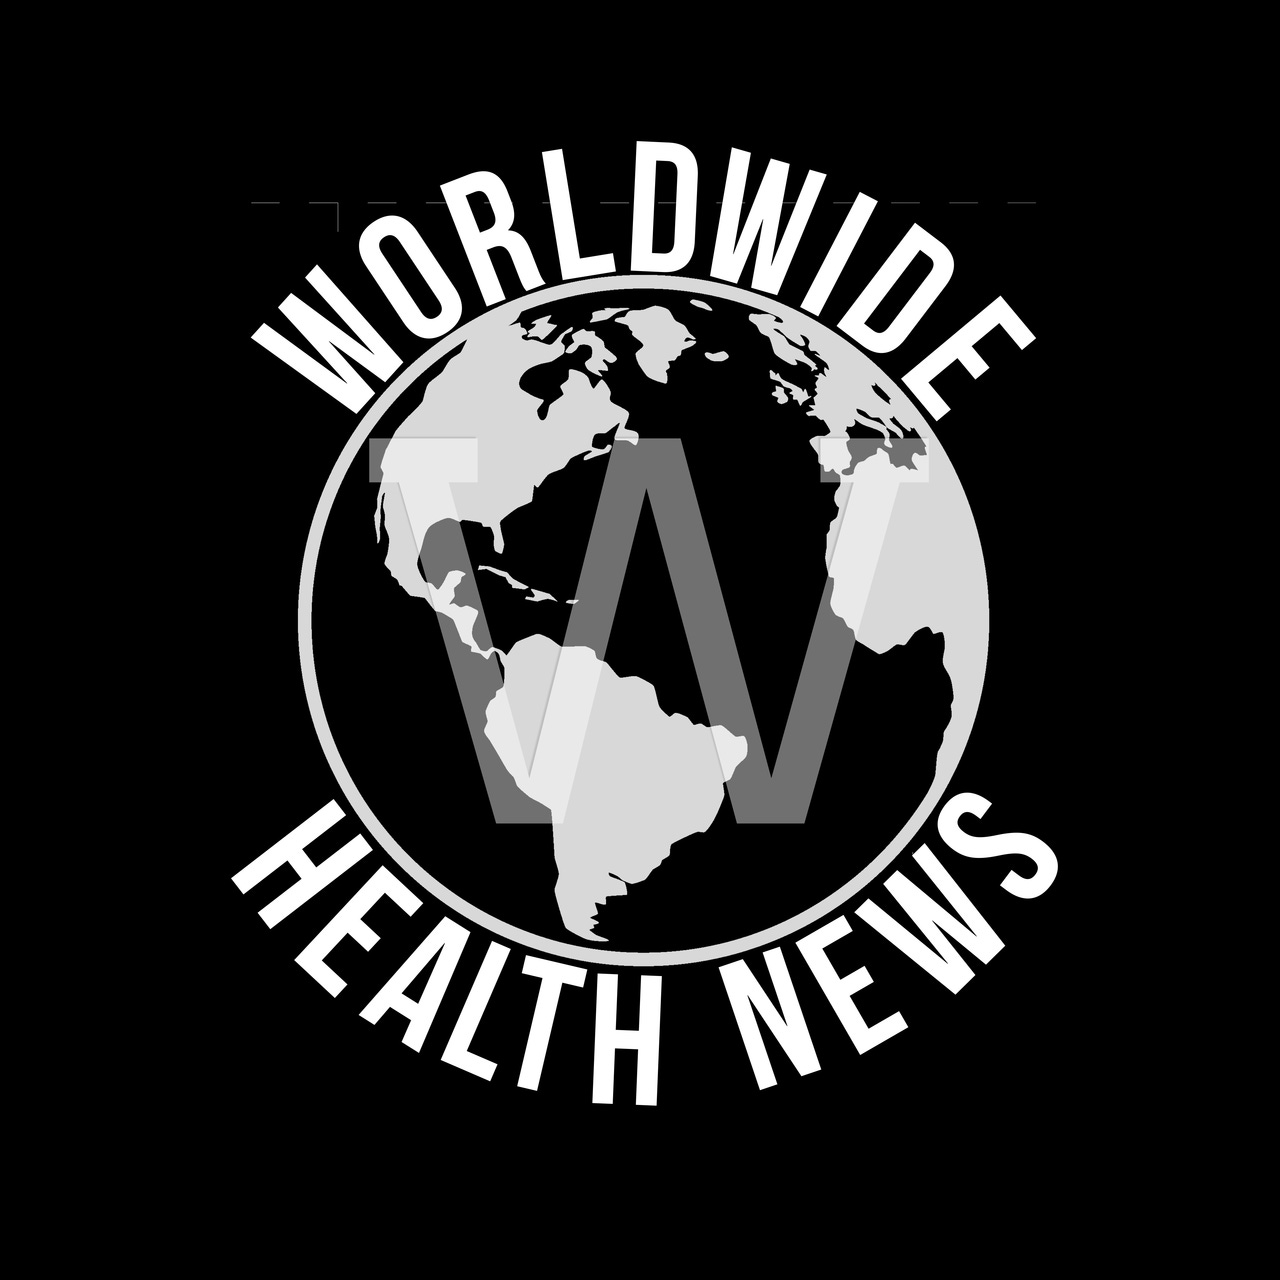 Artwork for Worldwide Health News